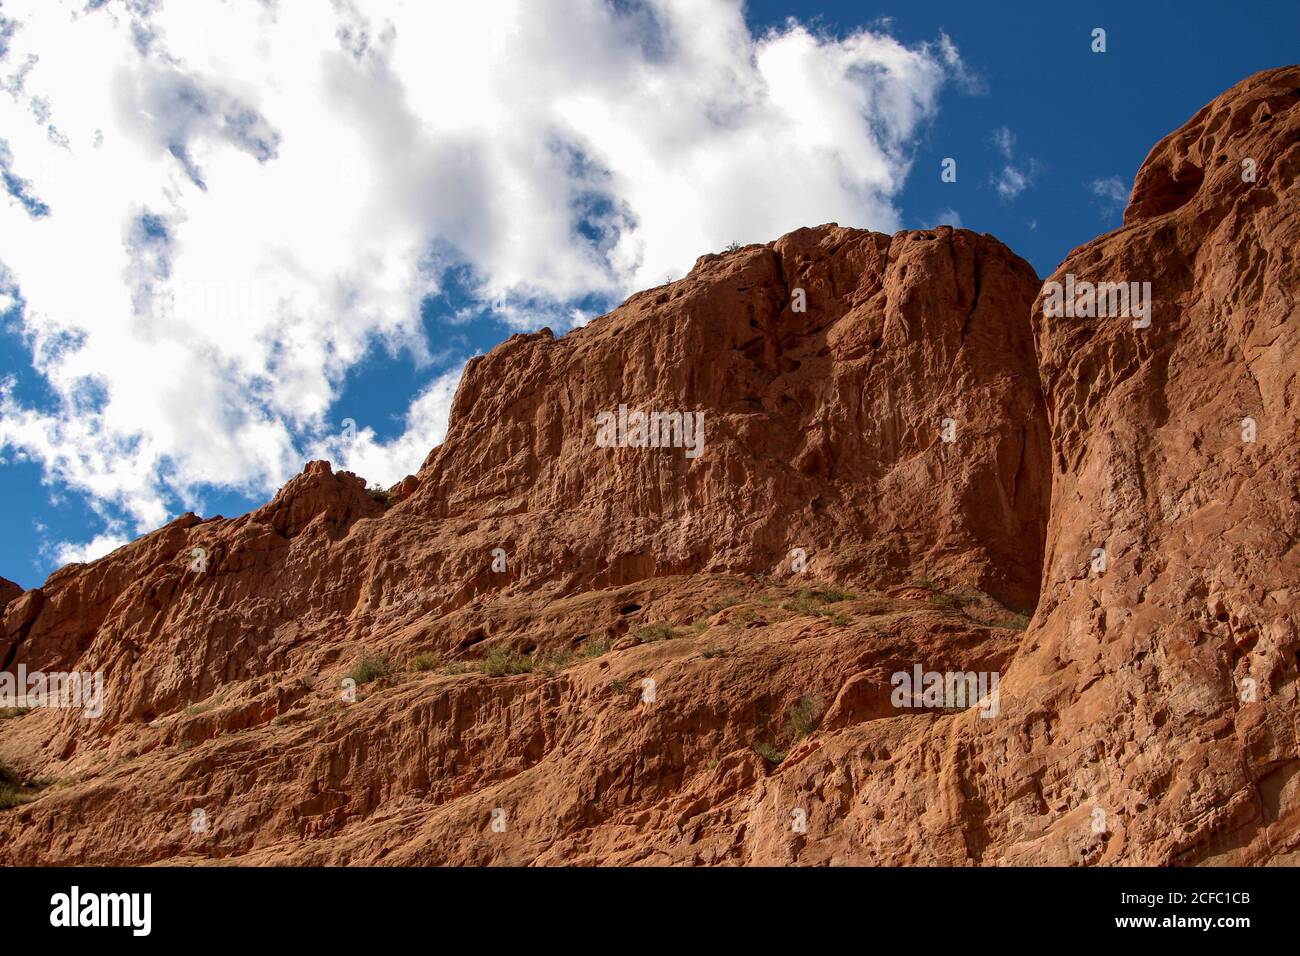 Garden of the Gods in Colorado Springs USA rock formation mountains stones Stock Photo